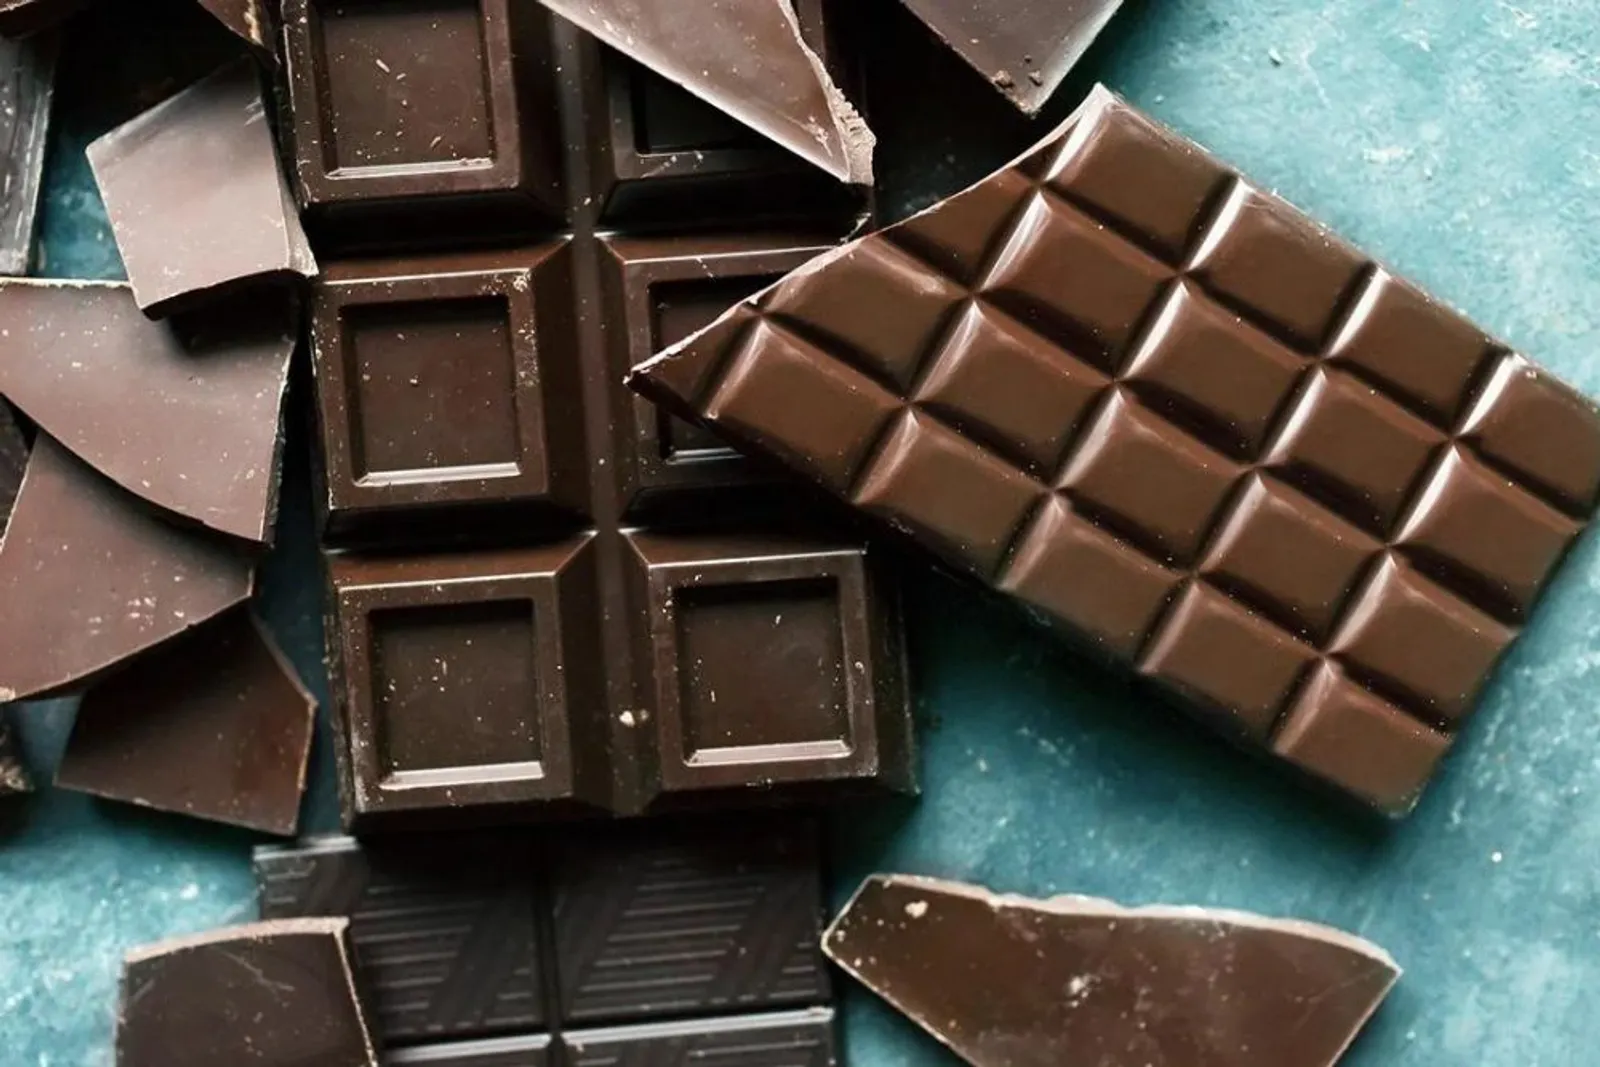 5 Manfaat Makan Cokelat Saat Haid, Bikin Happy! 